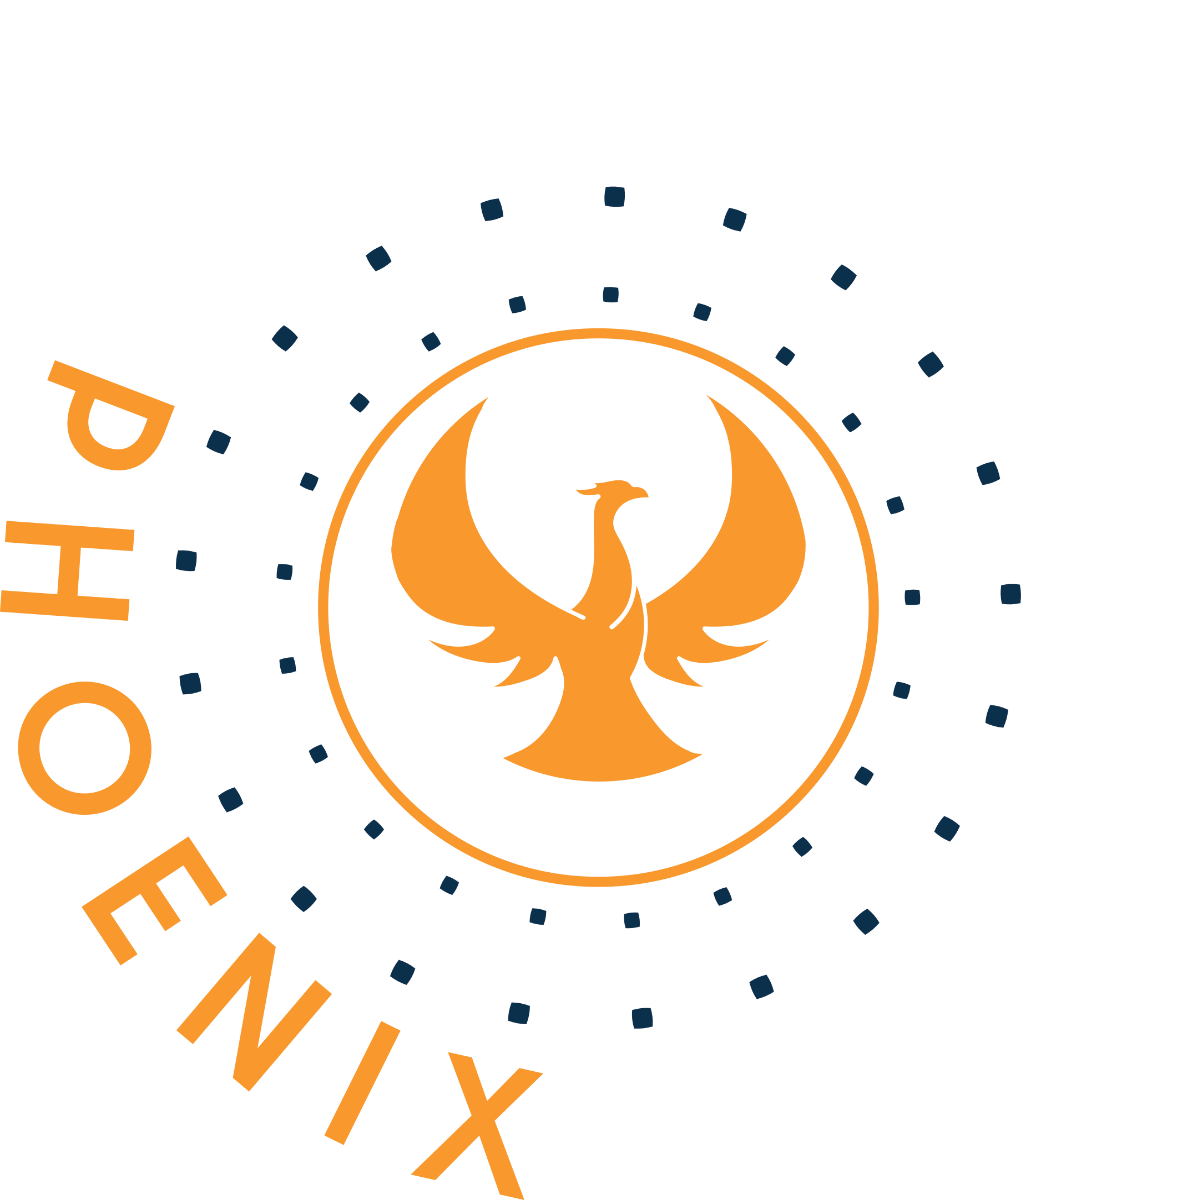 Oban Phoenix